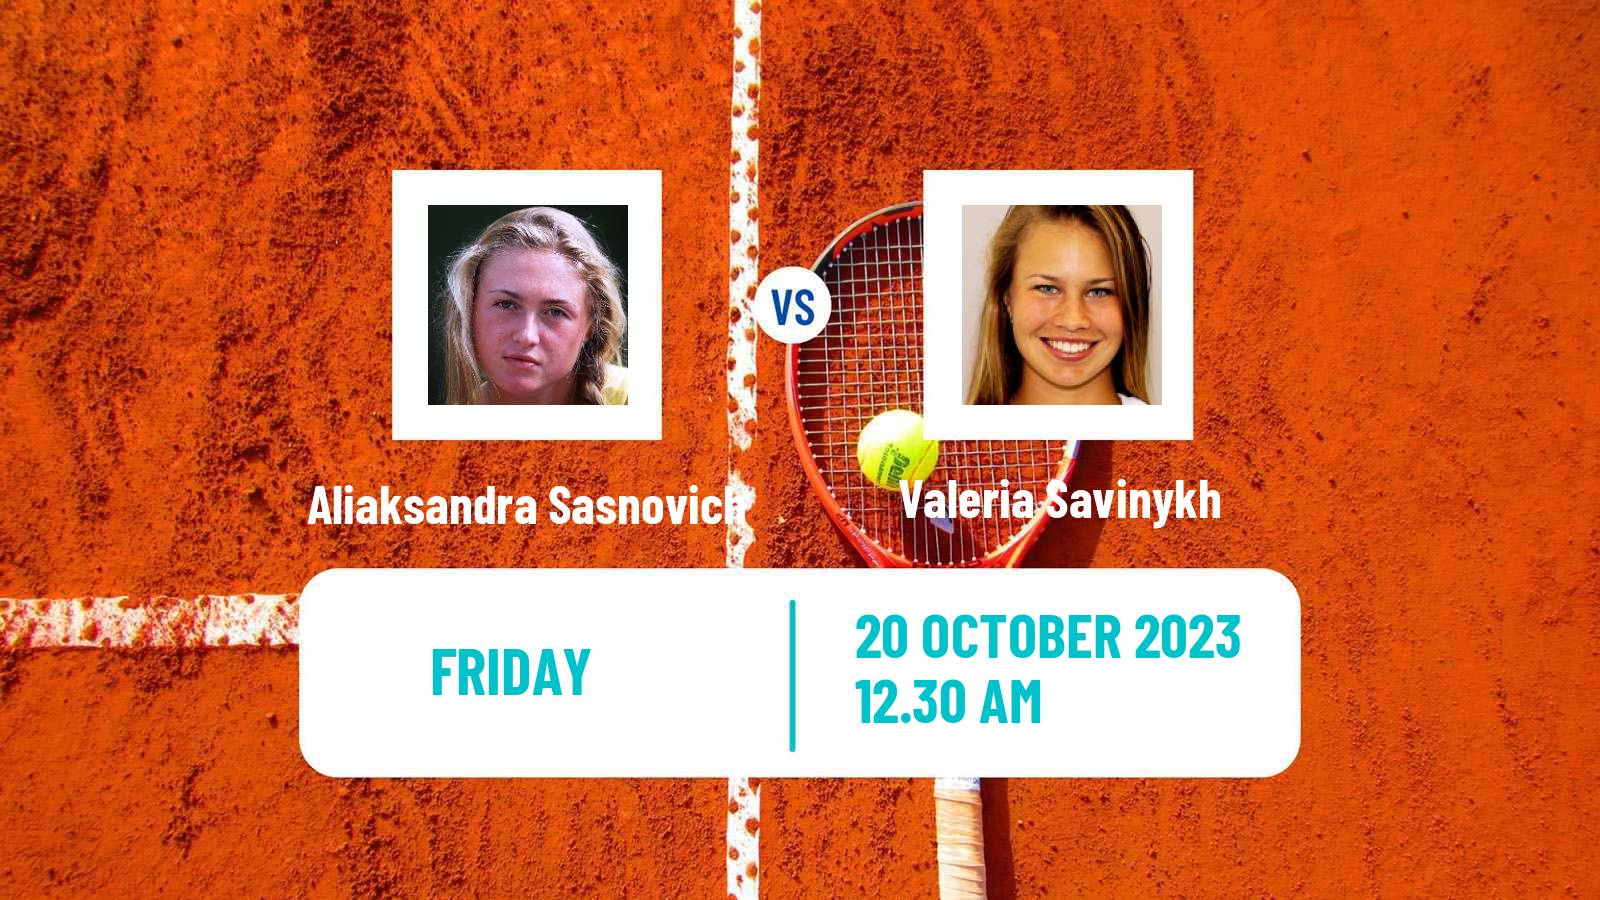 Tennis WTA Nanchang Aliaksandra Sasnovich - Valeria Savinykh